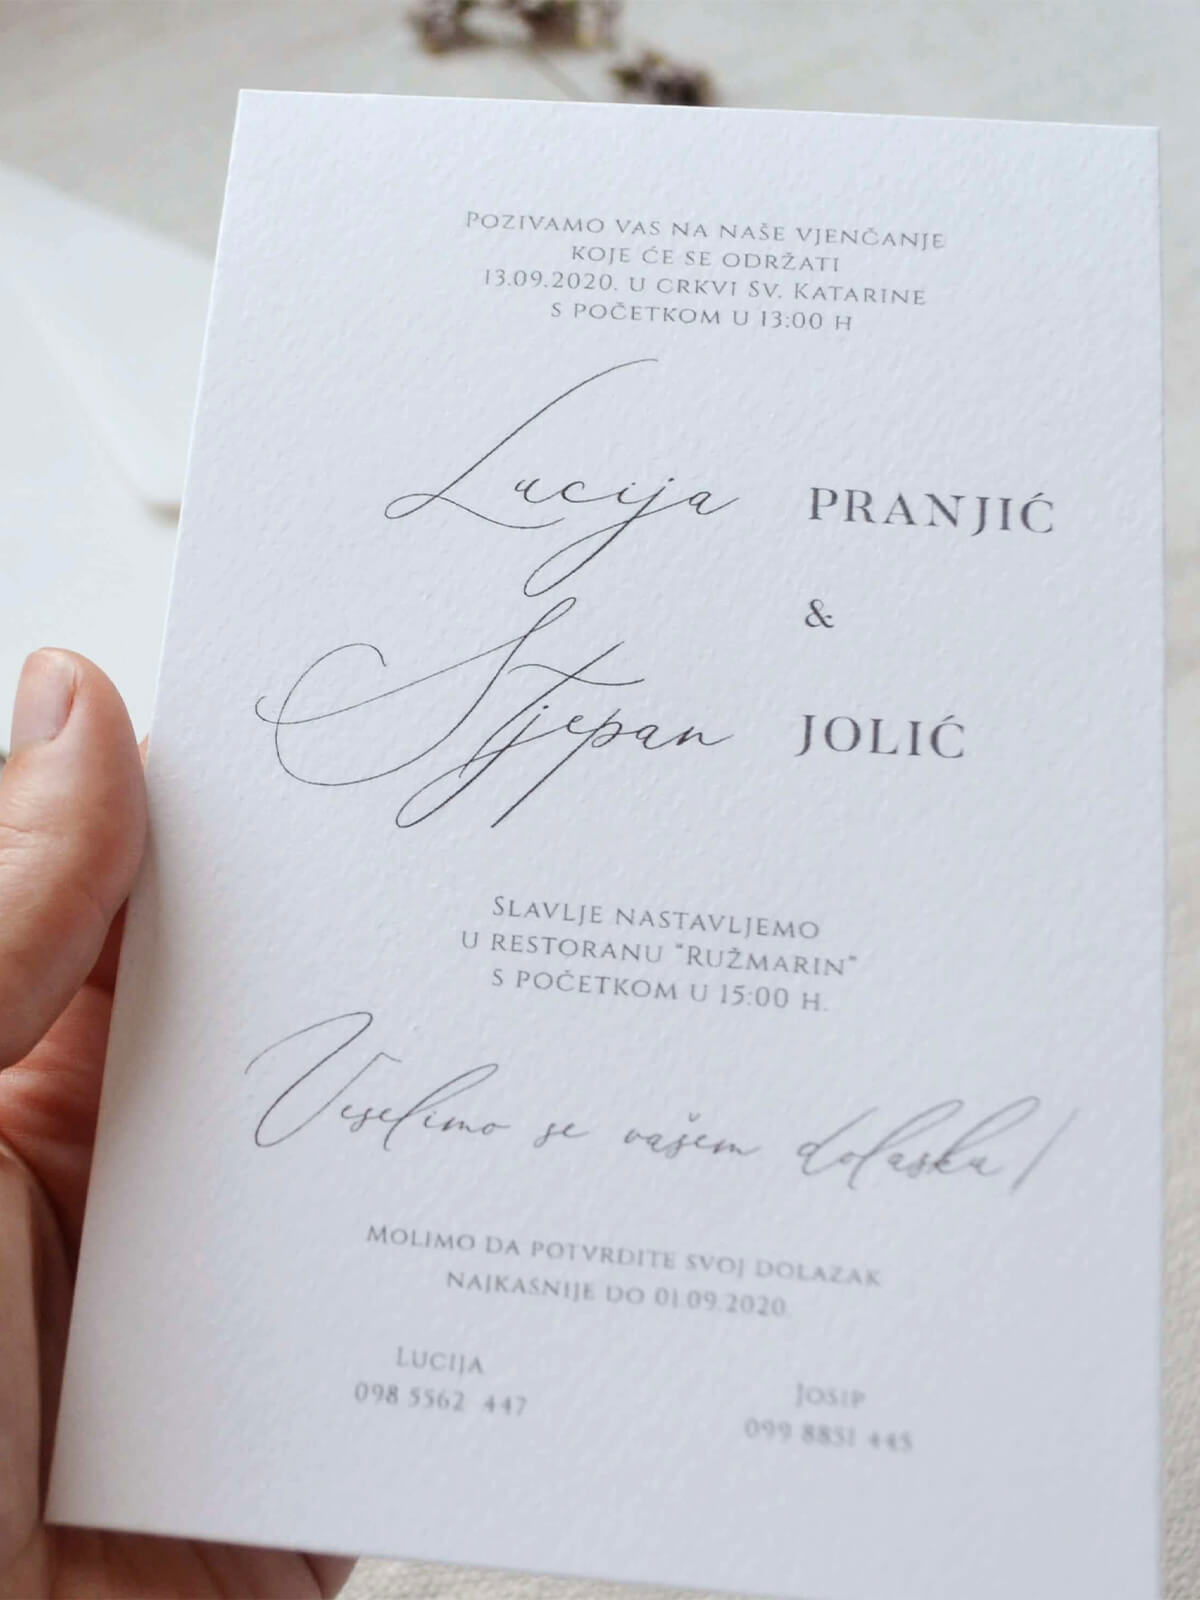 Elegantna pozivnica za vjenčanje s kaligrafijom i suptilnim dizajnom u pozadini